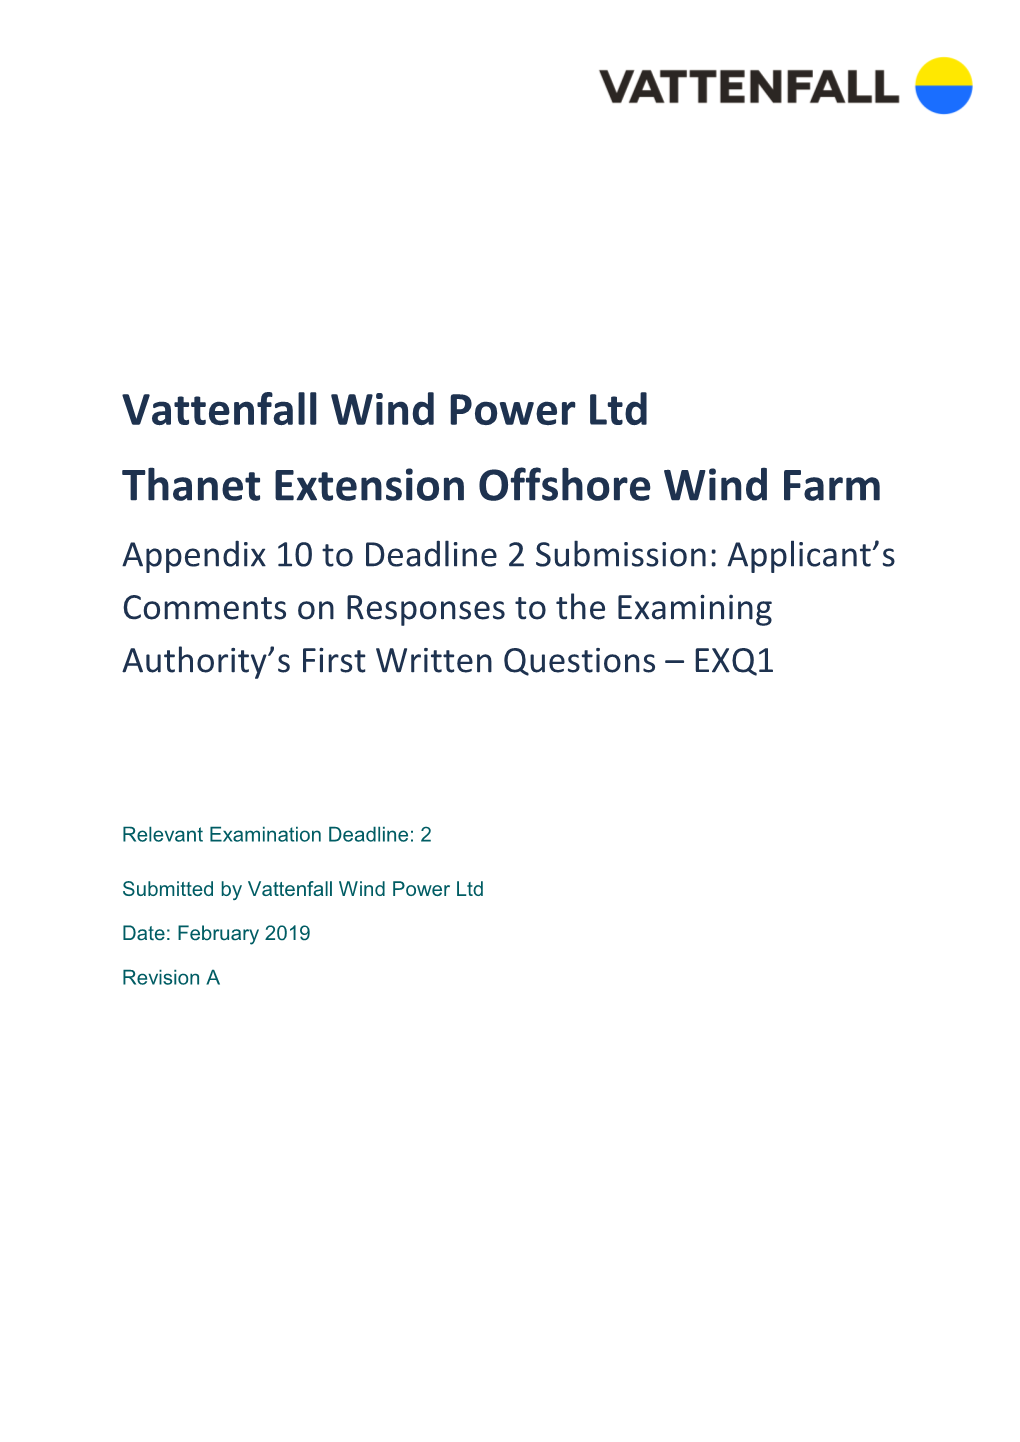 Vattenfall Wind Power Ltd Thanet